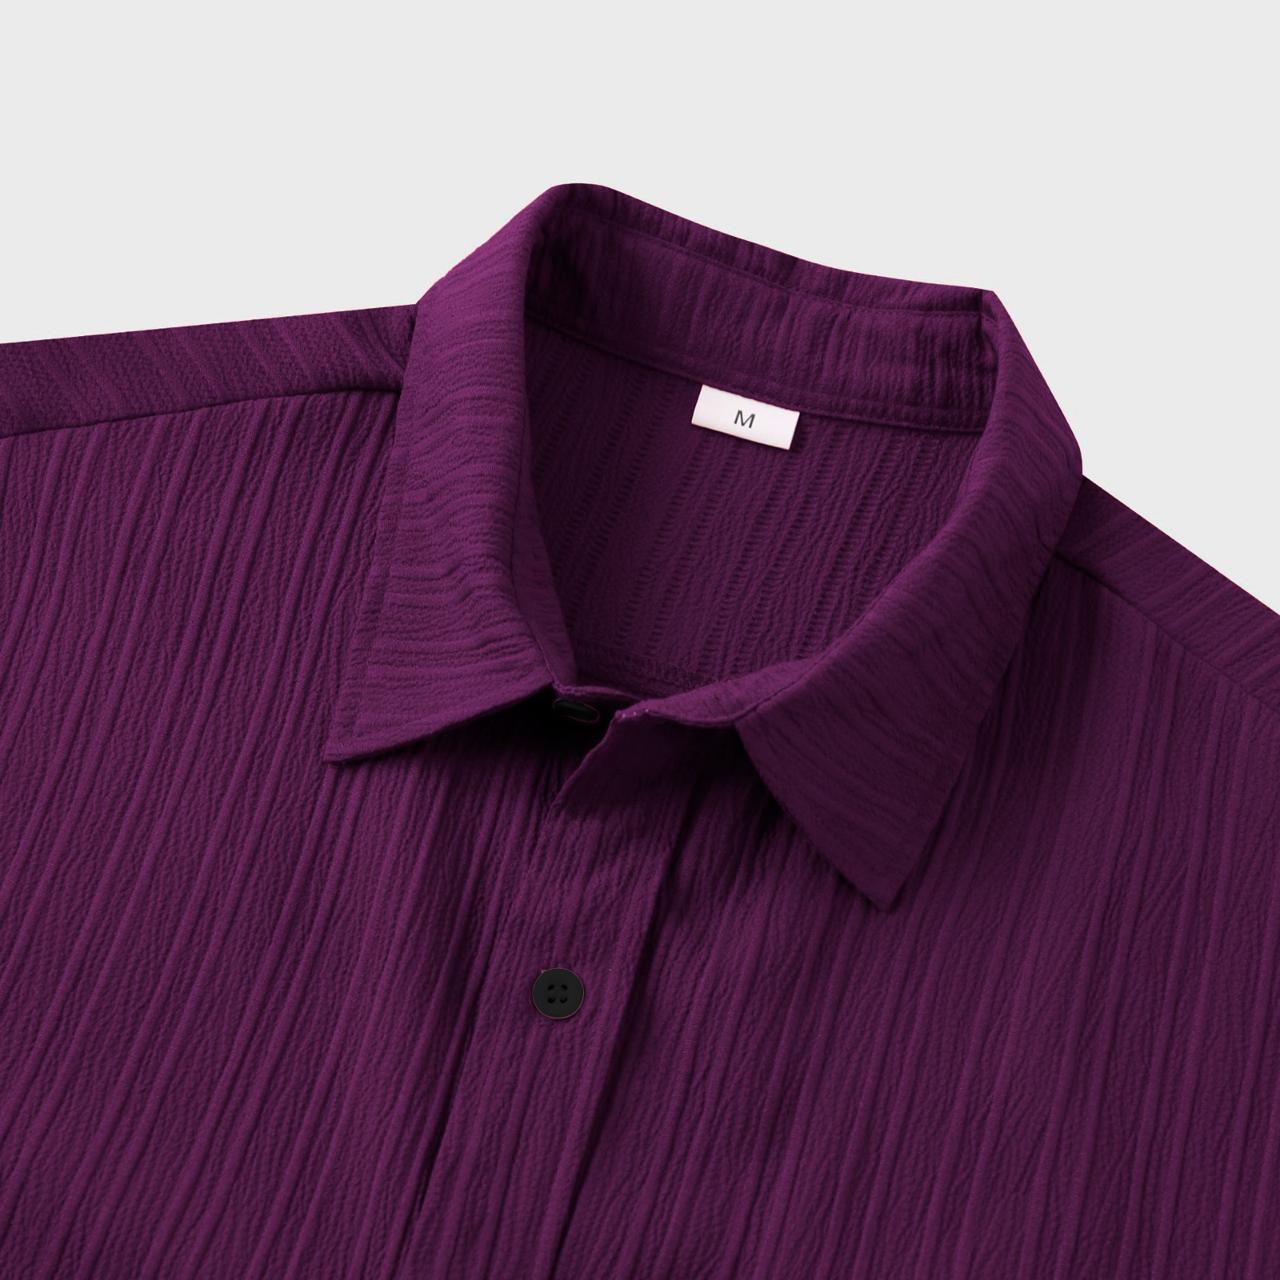 Wine Colour Premium Lining Structured Short Sleeve Shirt